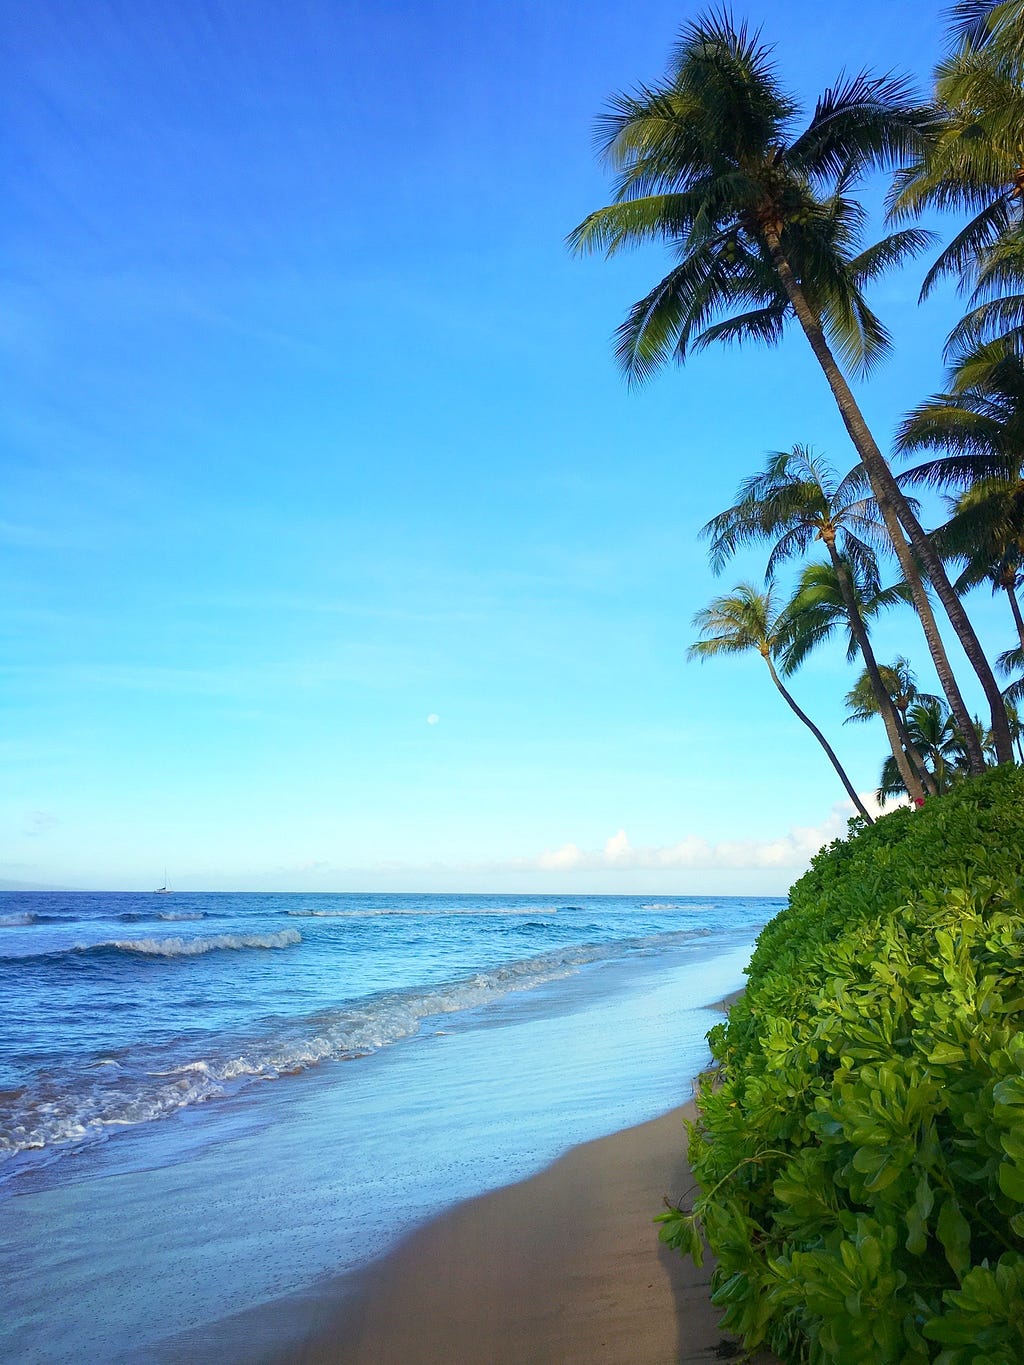 Photo of a beach in Hawaii.